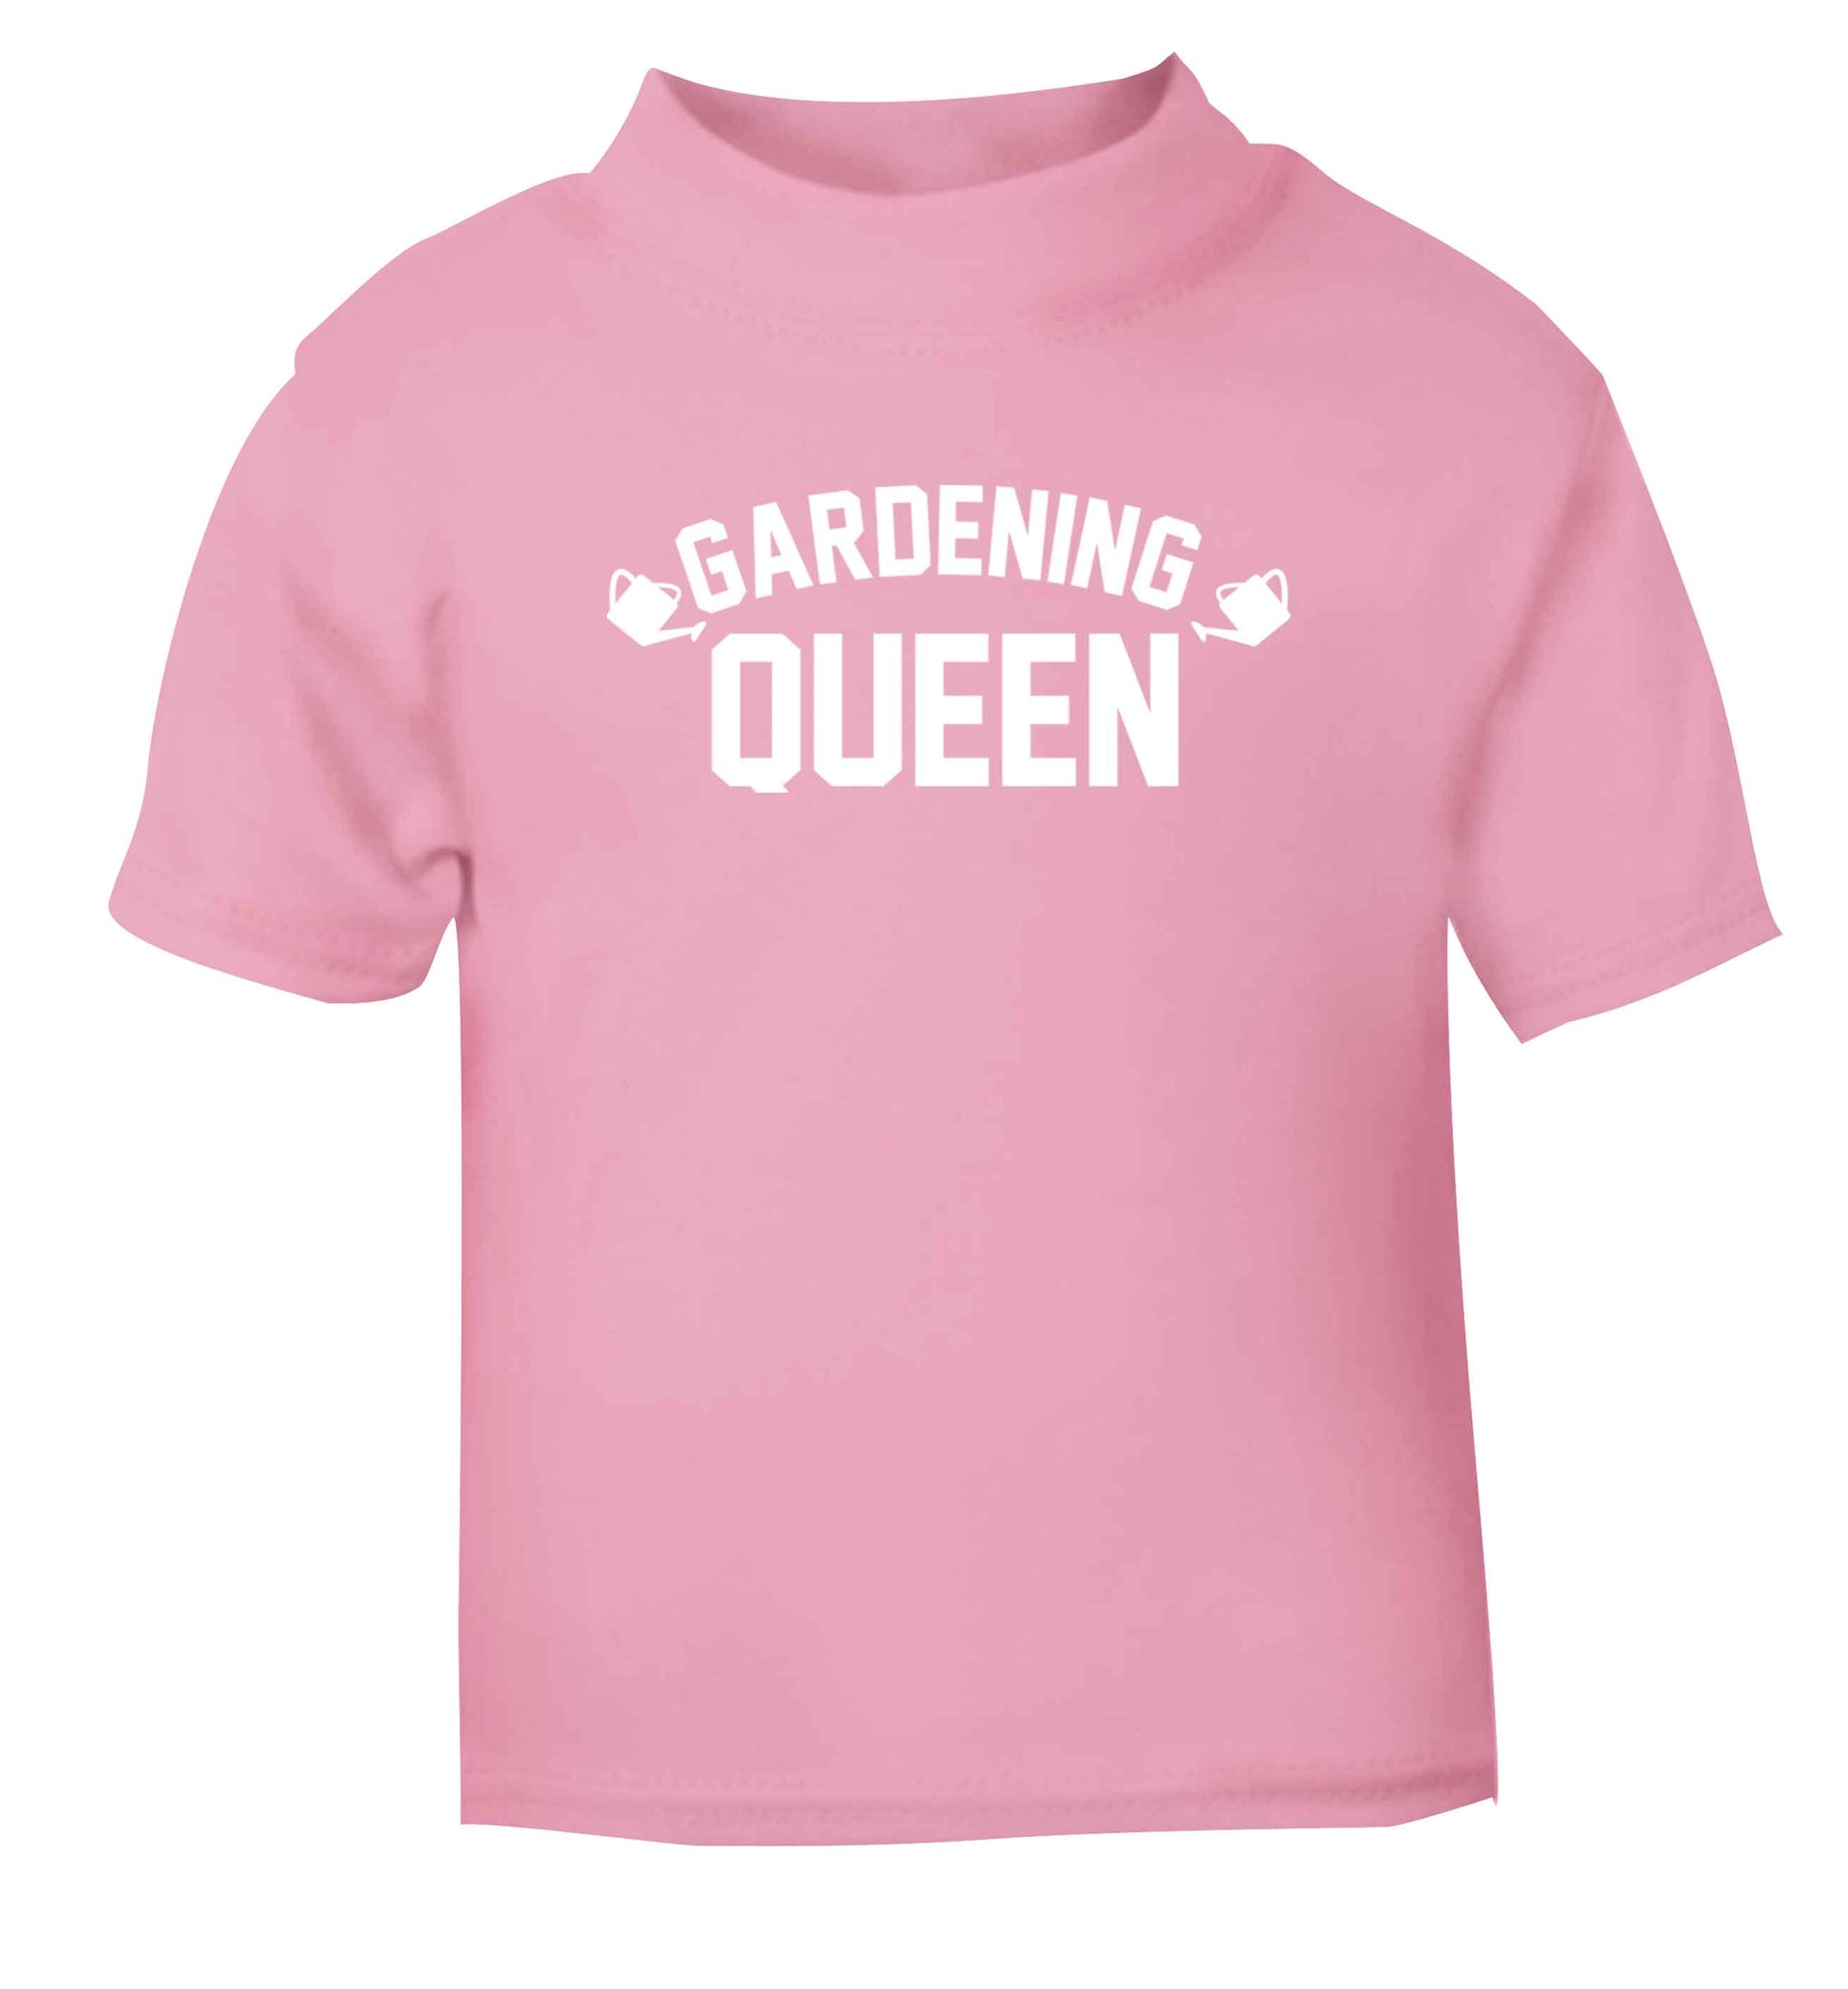 Gardening queen light pink Baby Toddler Tshirt 2 Years